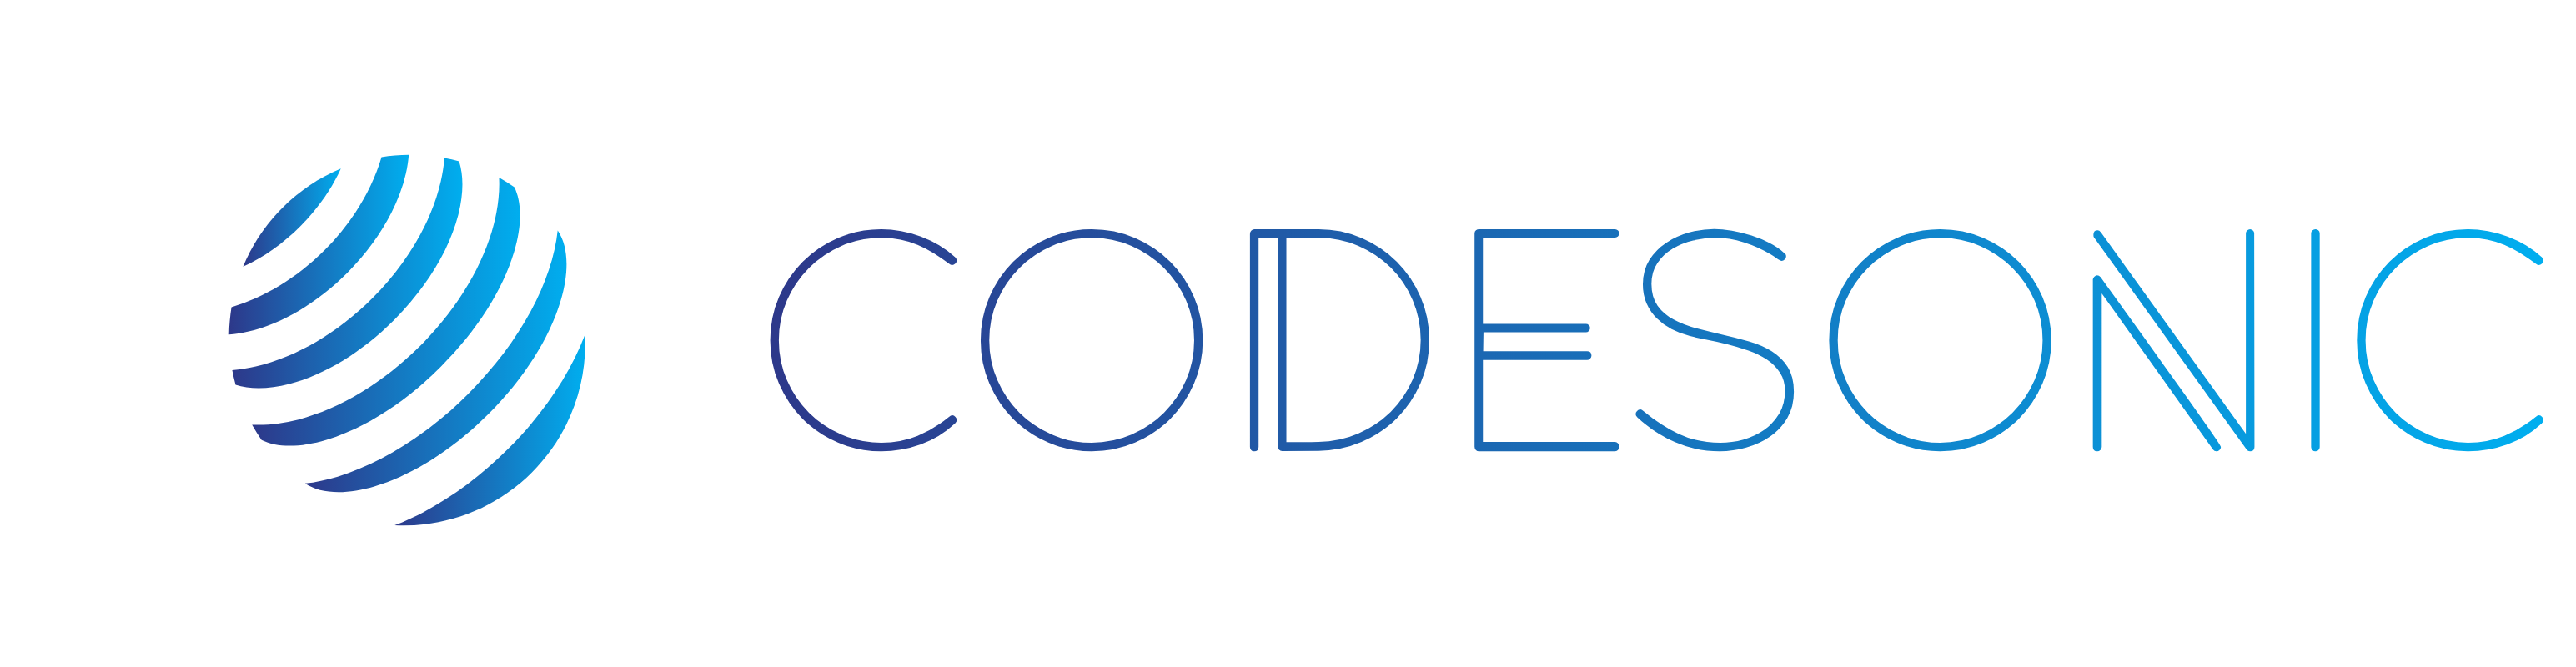 Codesonic Logo Navigation